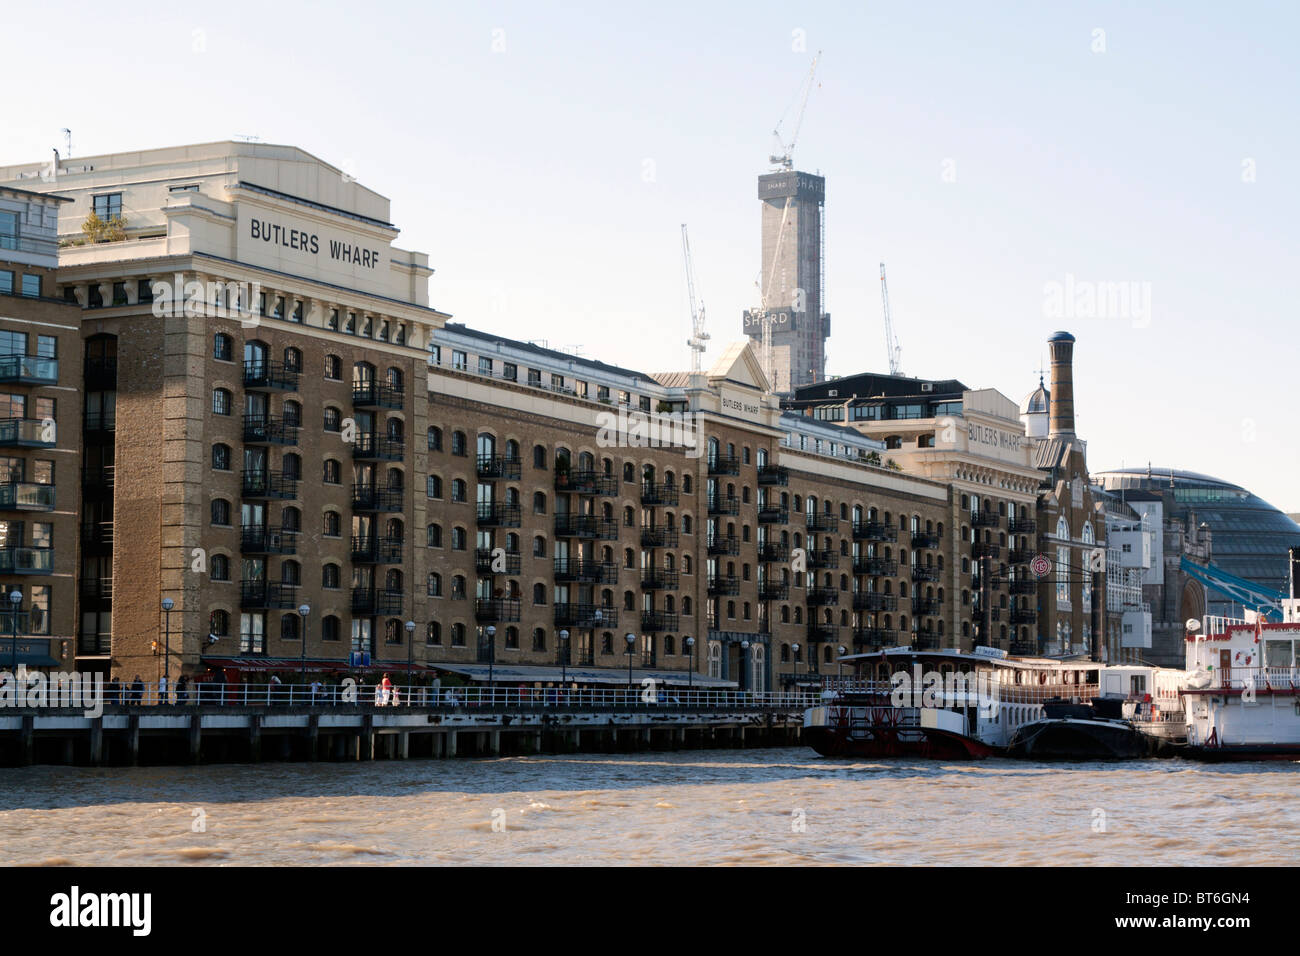 Butlers Wharf - Southwark - London Stock Photo